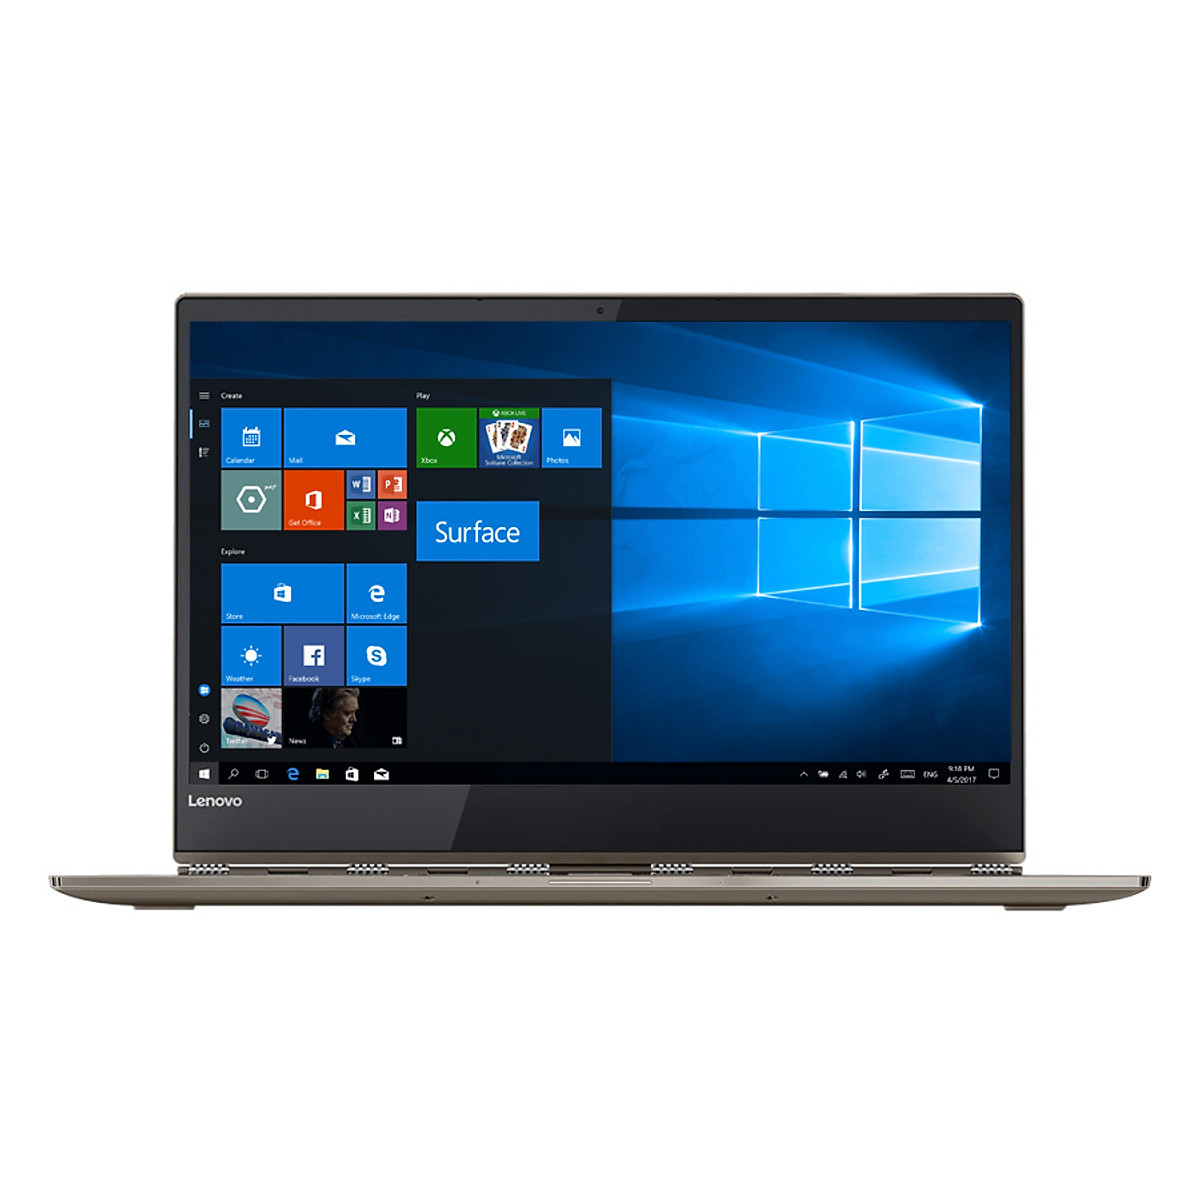 Mua Laptop Lenovo Ideapad Yoga 920-13IKB 80Y7009KVN Core i7-8550U/Win10  ( inch) - Hàng Chính Hãng (Bronze)